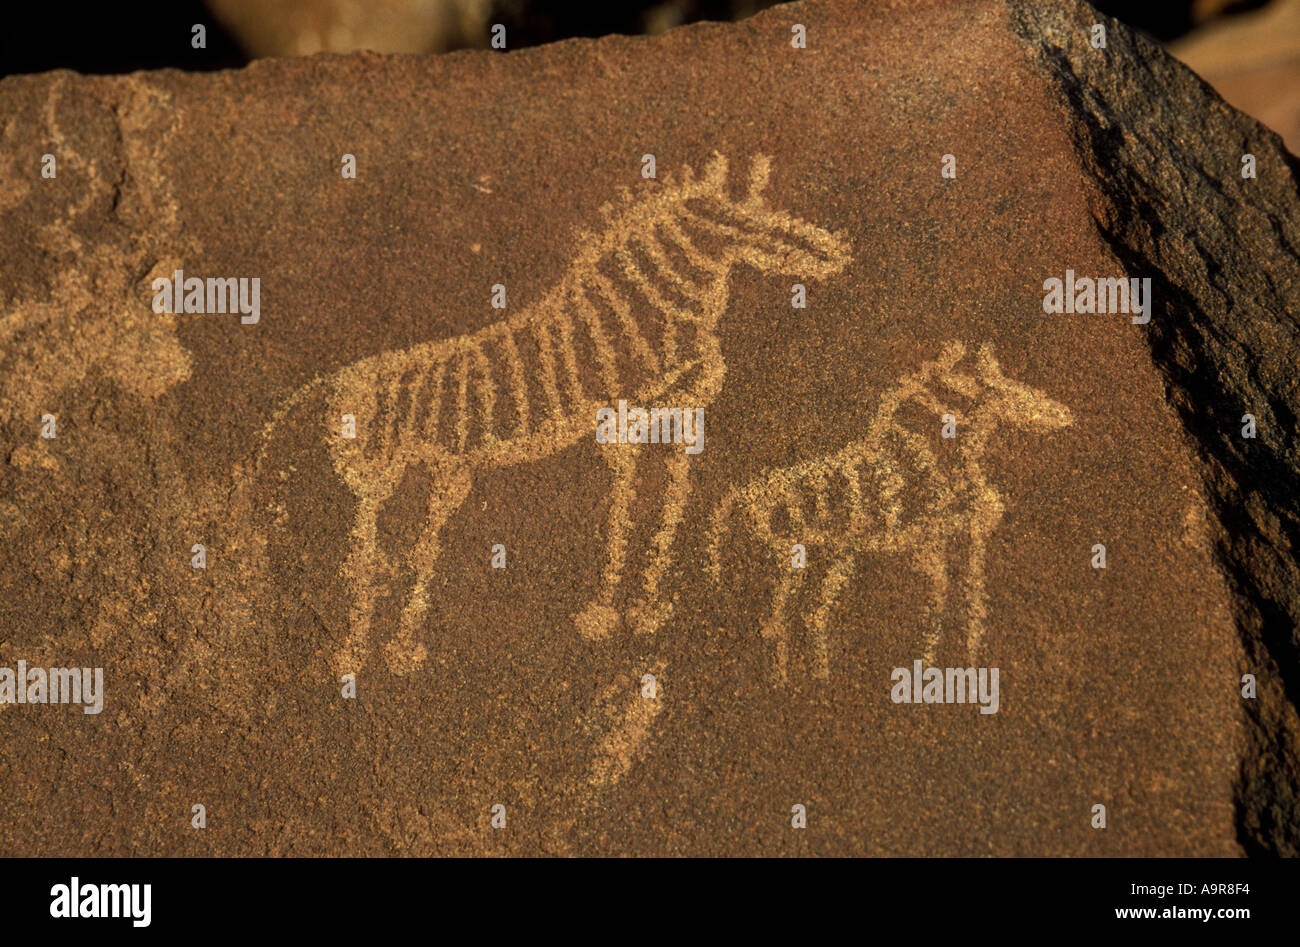 Rock engraving made by San people or Bushmen Twfelfontein National Monument Damaraland northern Namibia Africa Stock Photo